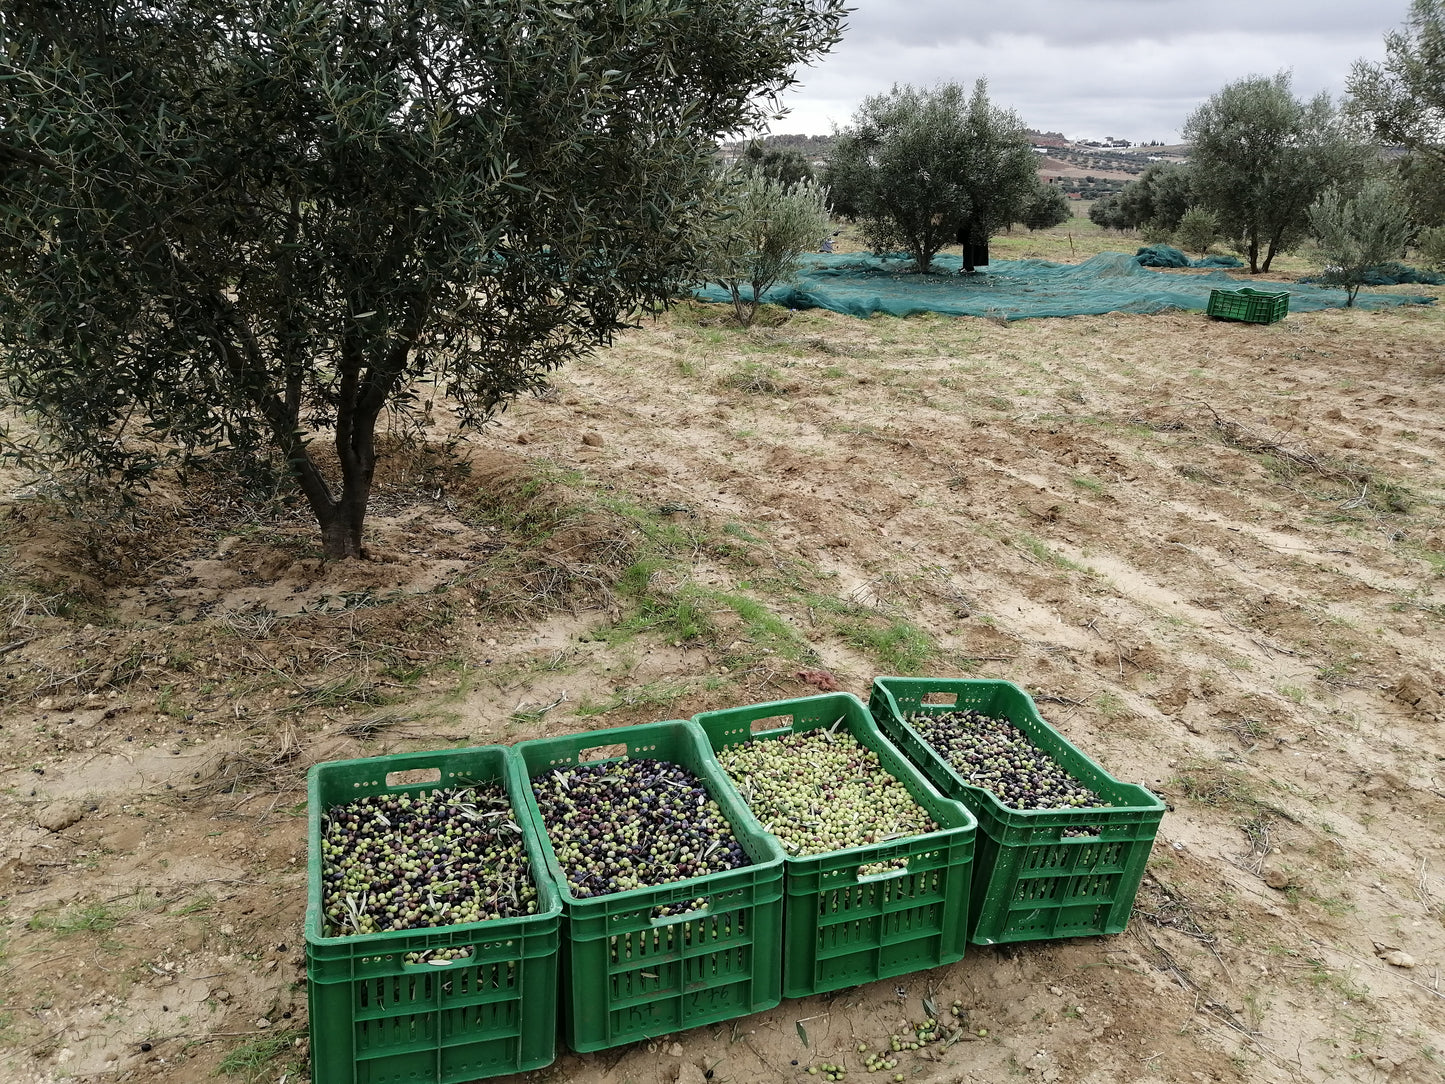 250 ml Premium Extra Virgin Olivenöl Ernte 2022/2023 - Phönizier Liquid Gold - Chetoui Olivenbaum niedriger Säuregehalt & hohes Polyphenolgehalt